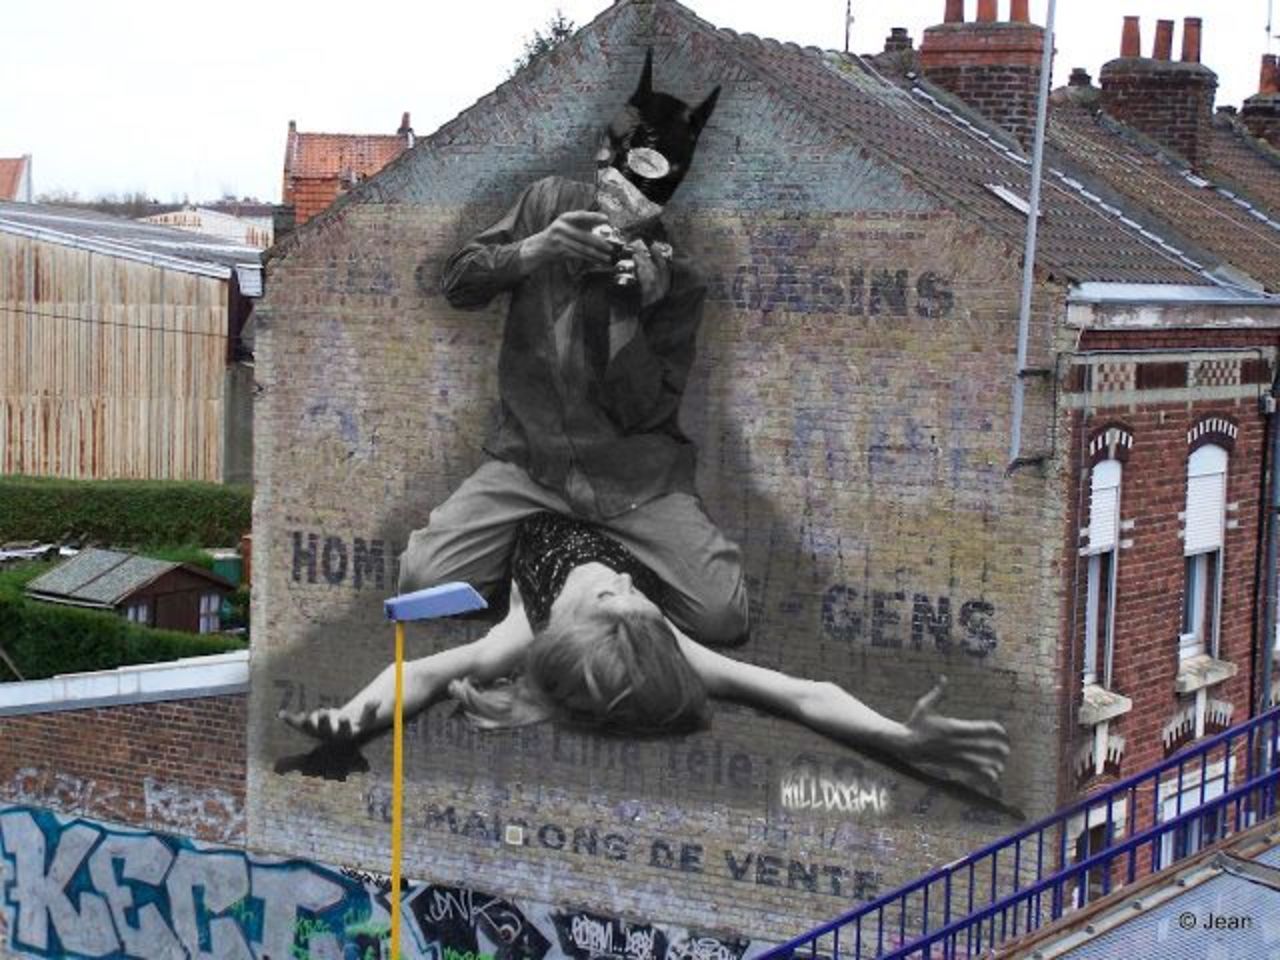 Mural by French artist KillDogMe, location unknown #killdogme #streetart #artderue #straßenkunst #artedelcalle #straatkunst #стритарт #граффити #urbanart #arteurbano #mural #murals #graffitiart #graffiti #sprayart #wallart #cityart  via Pinterest | https://goo.gl/92TYNT https://t.co/C4lwTJM6Xg